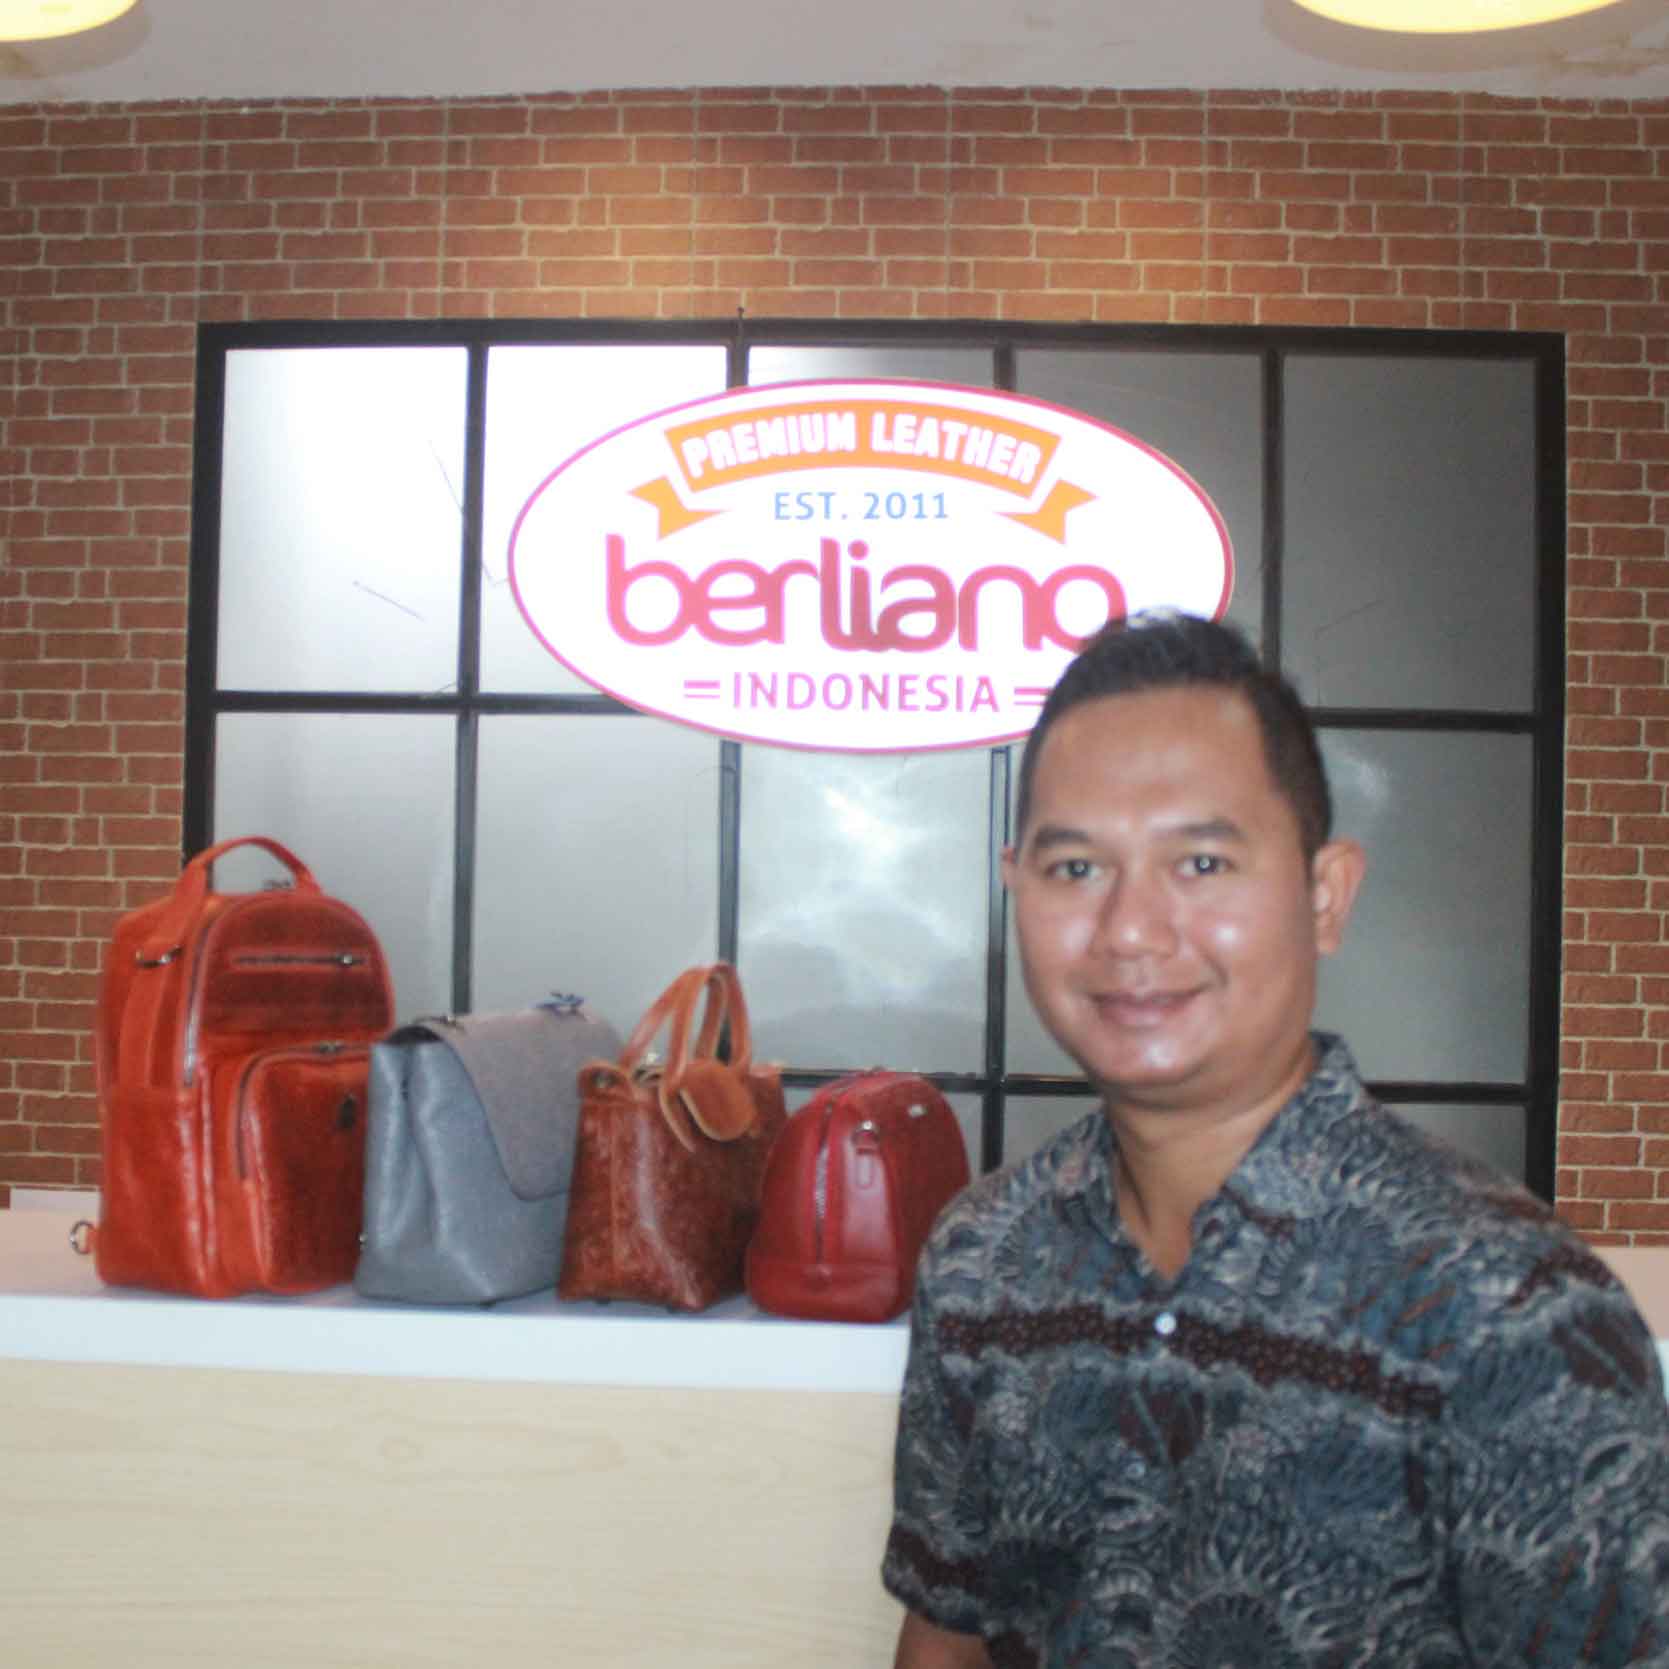 Berliano merwk brand tas lokal yogyakarta indonesia motif batik model terbaru